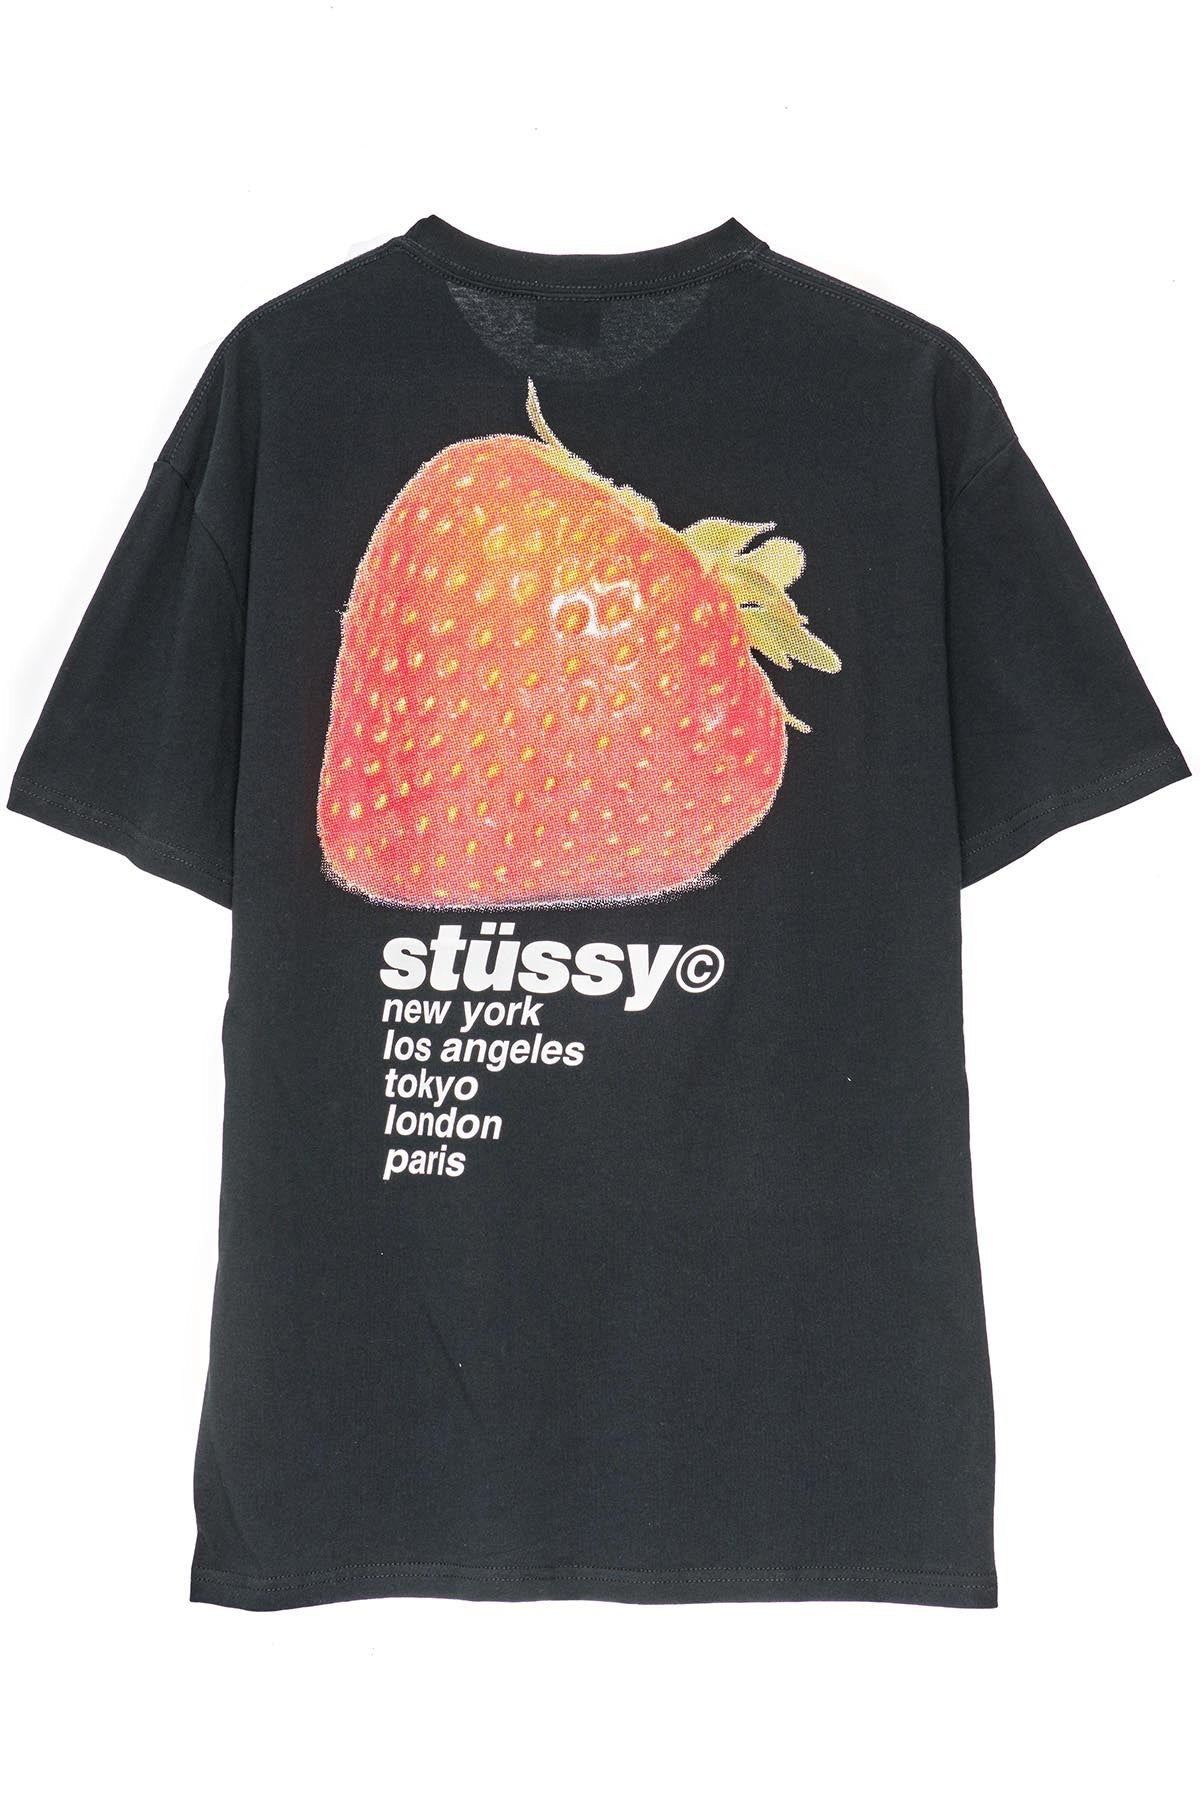 Stussy strawberry ss tee - black